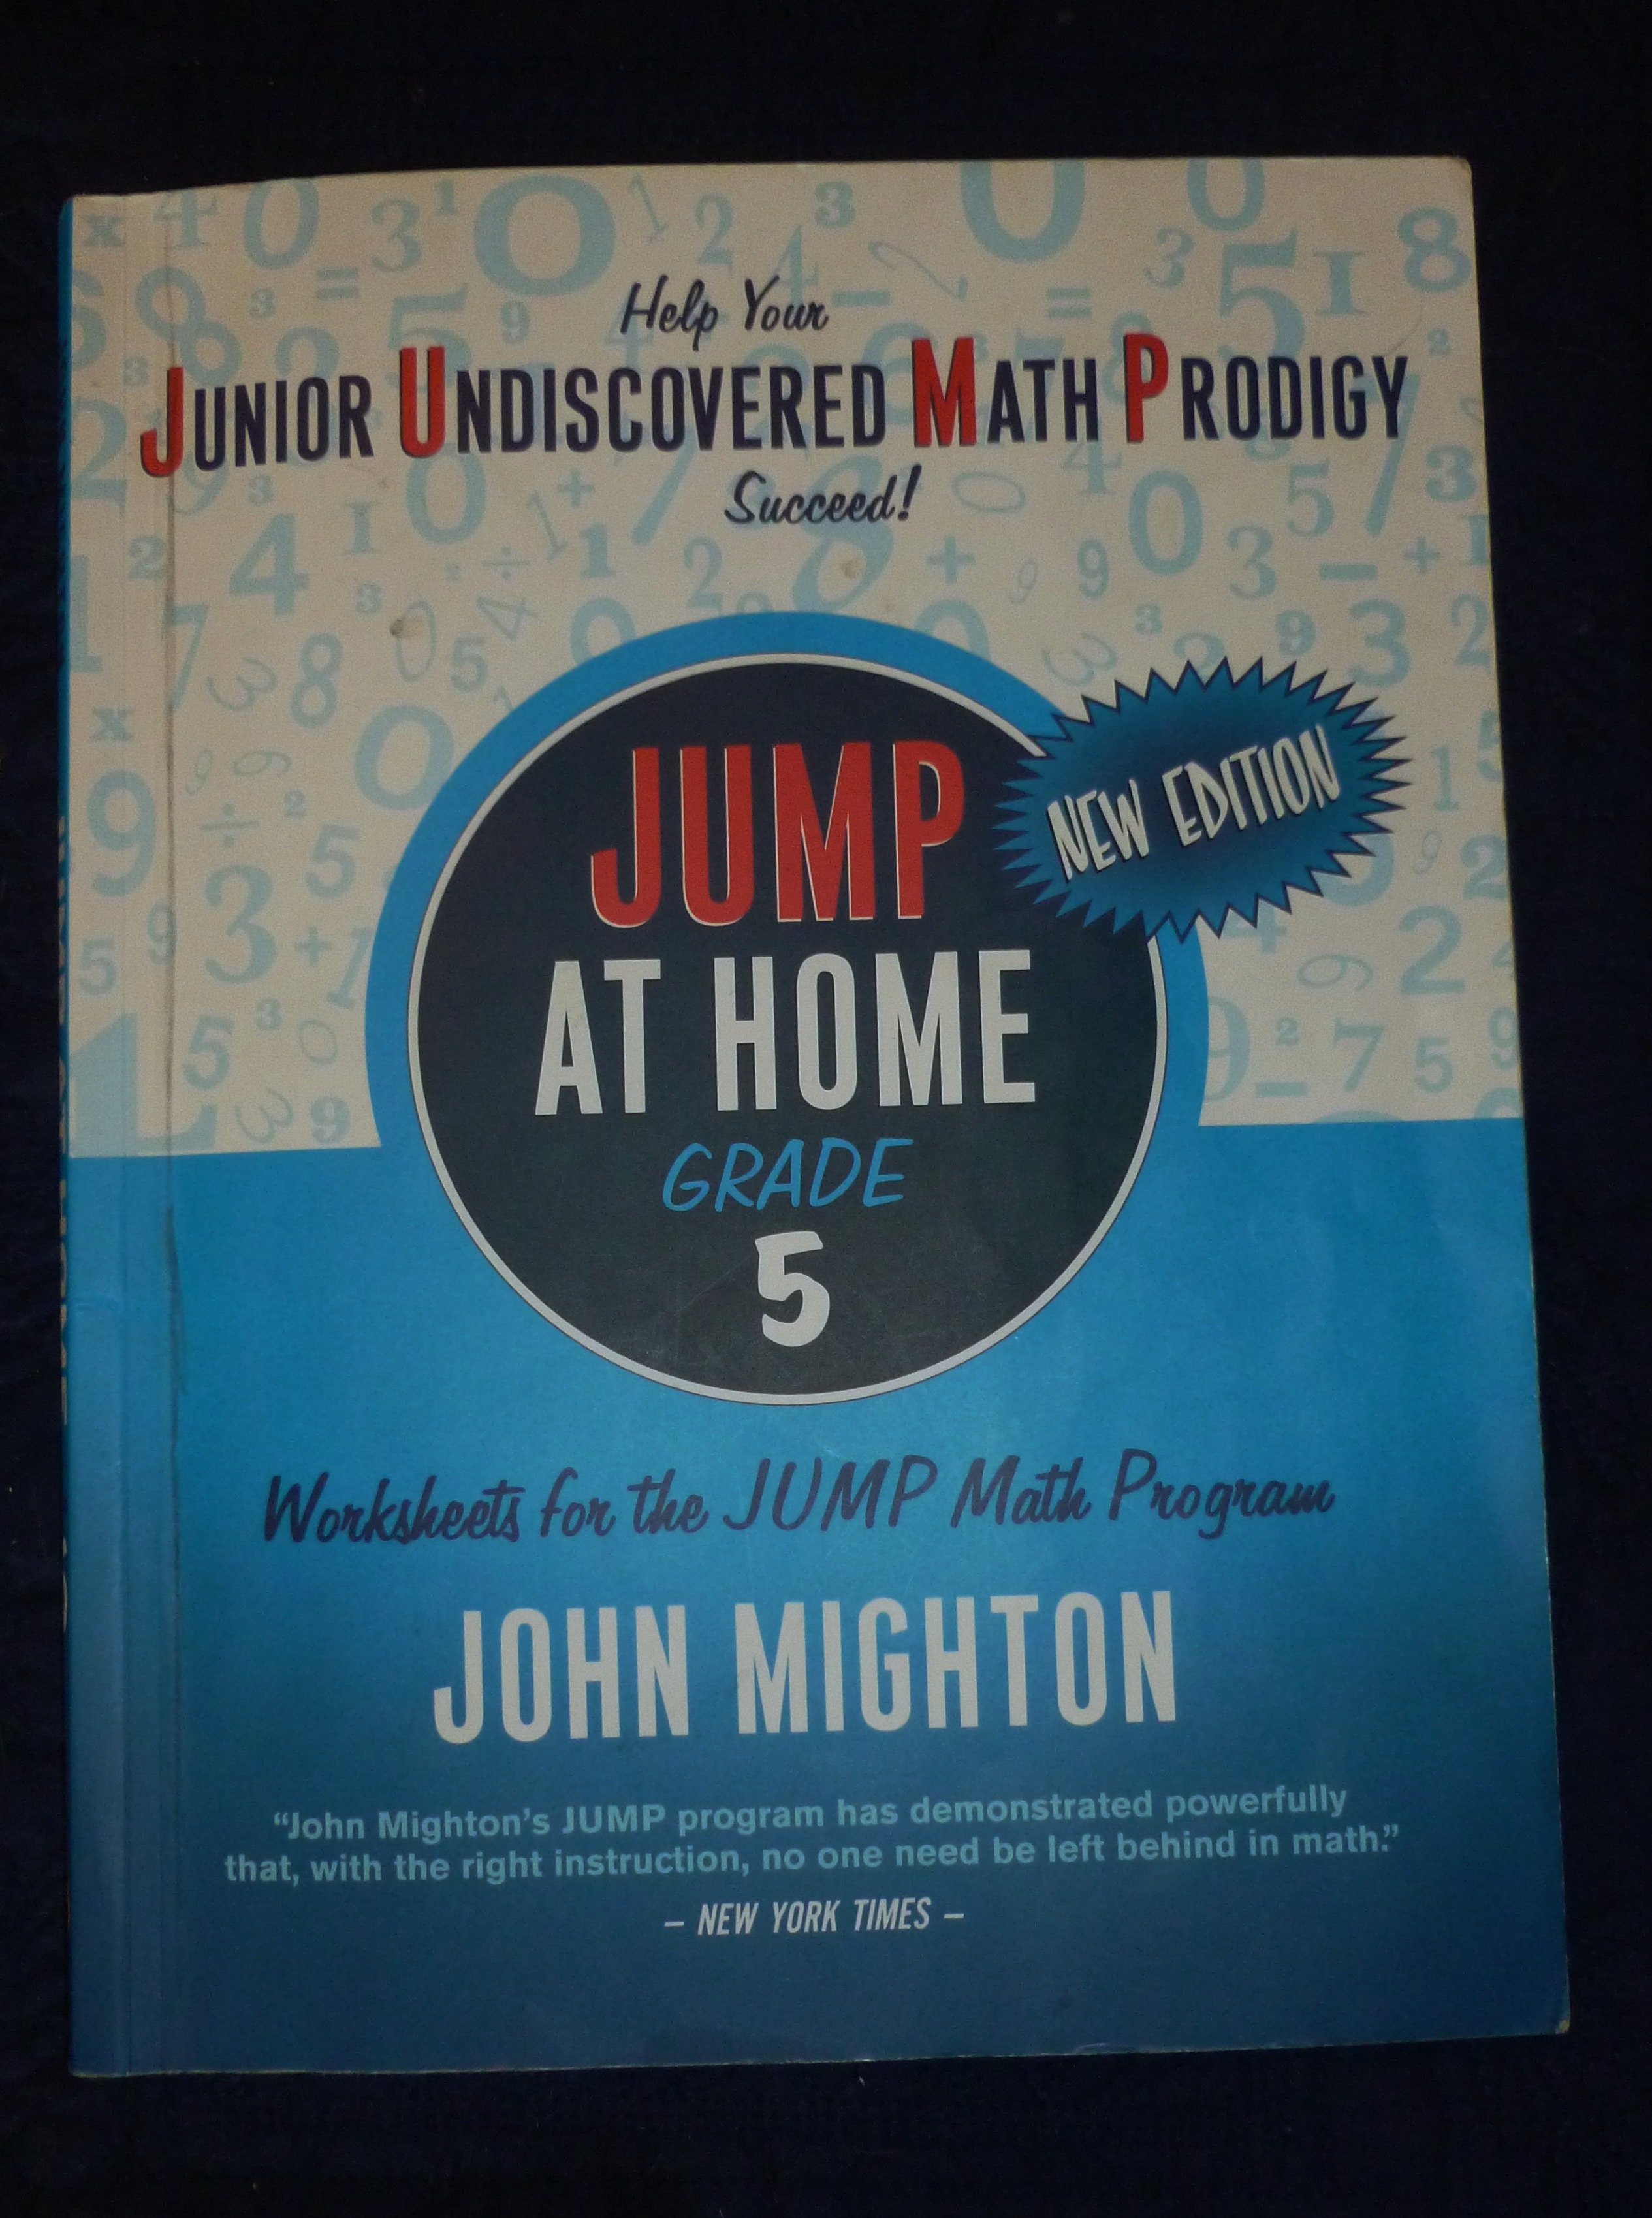 JUMP Math – Junior Undiscovered Math Prodigies